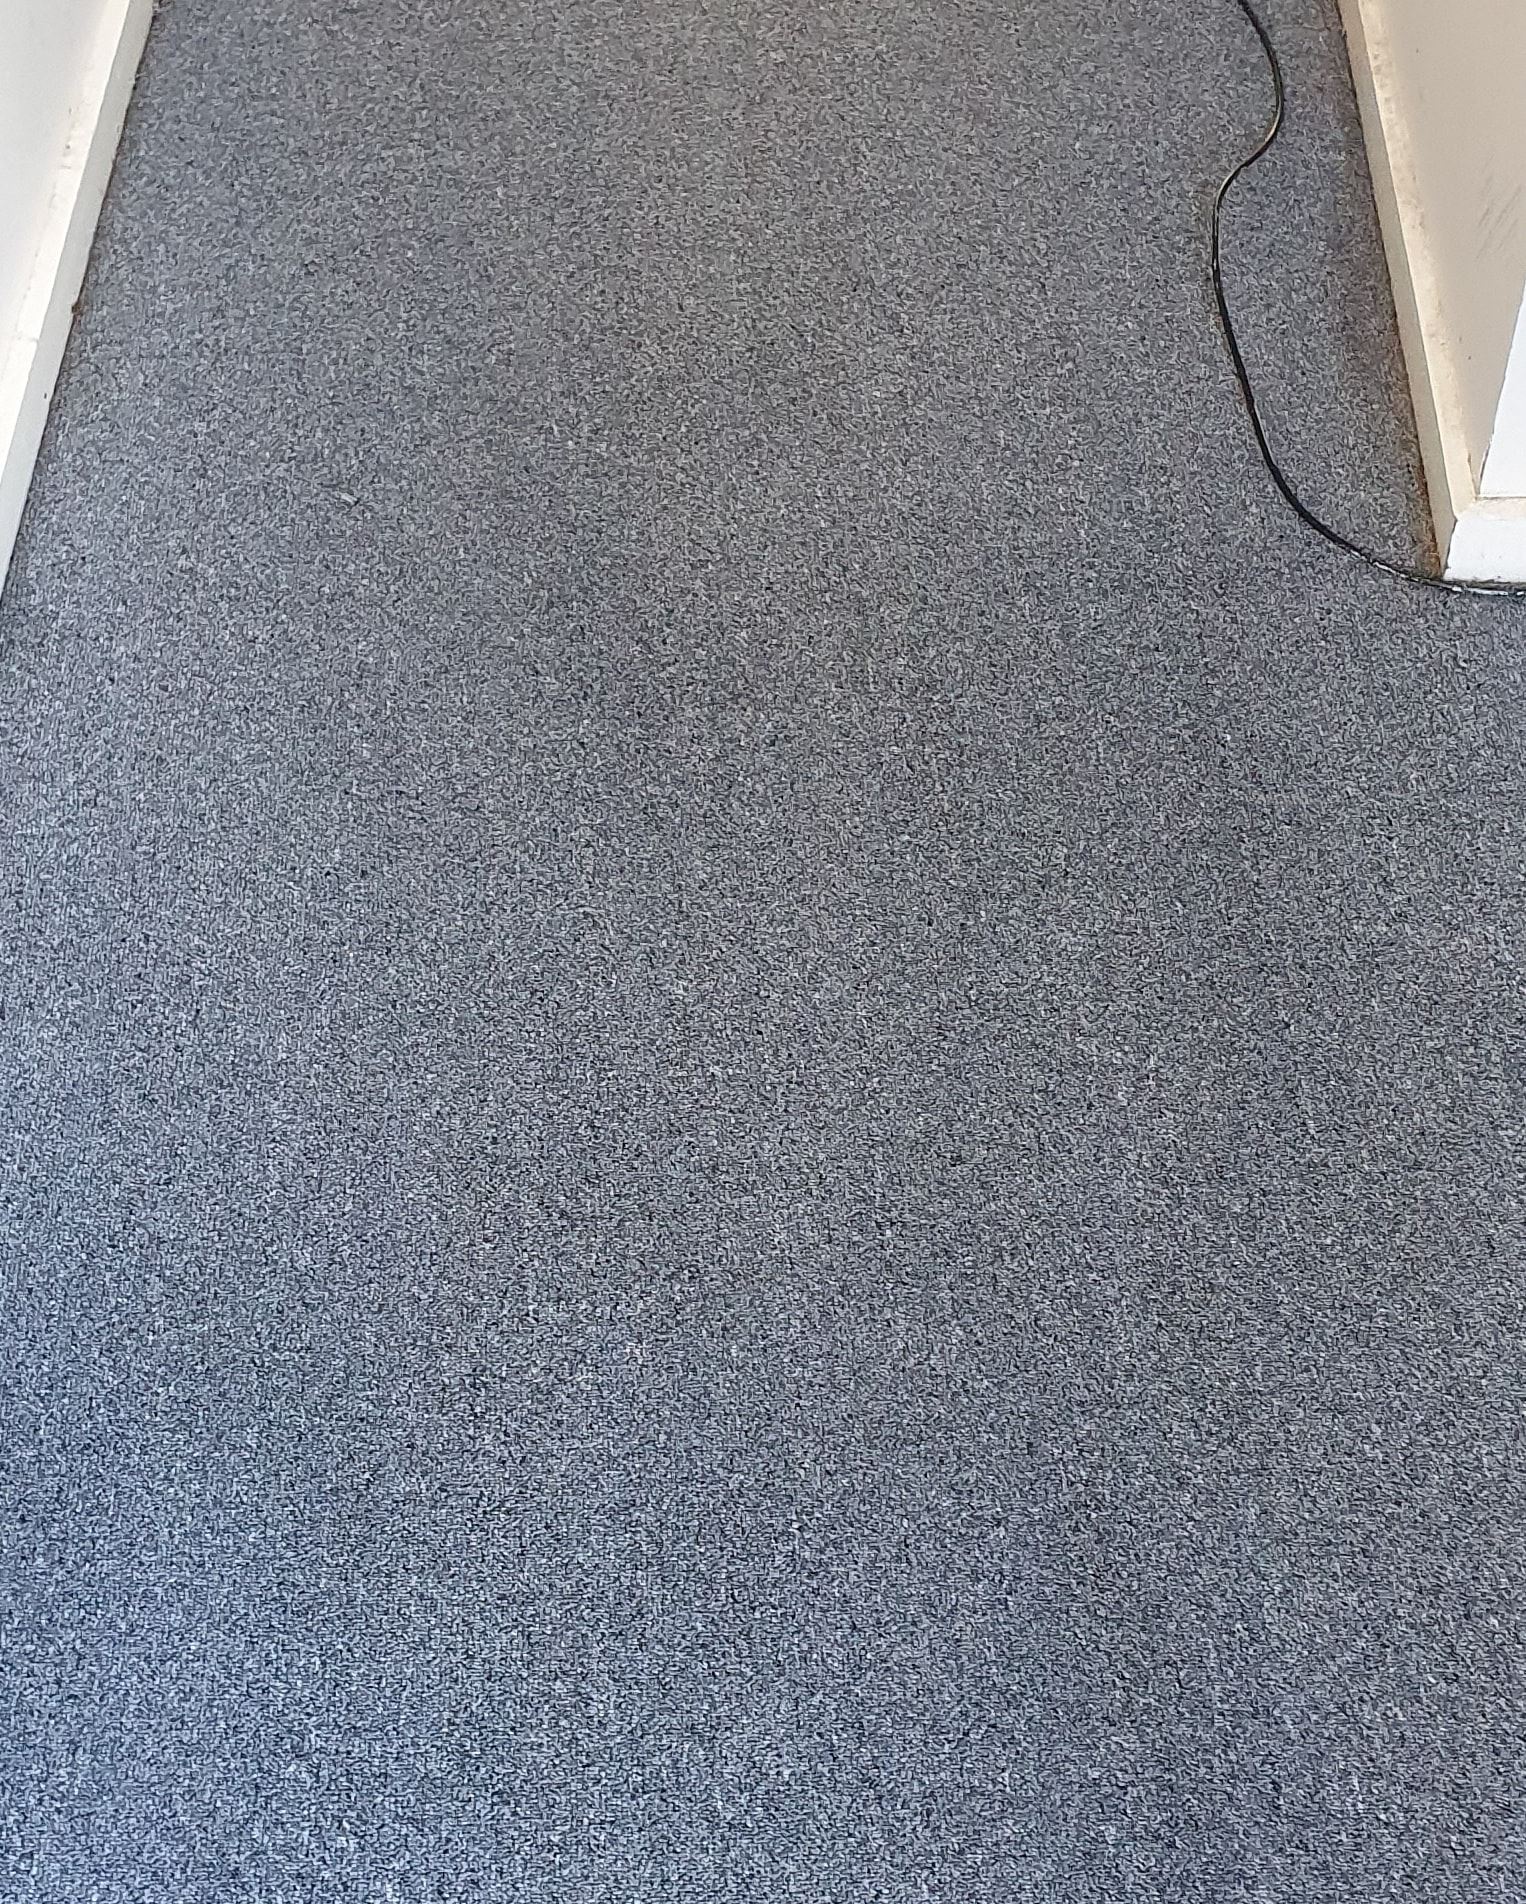 A now clean hallway